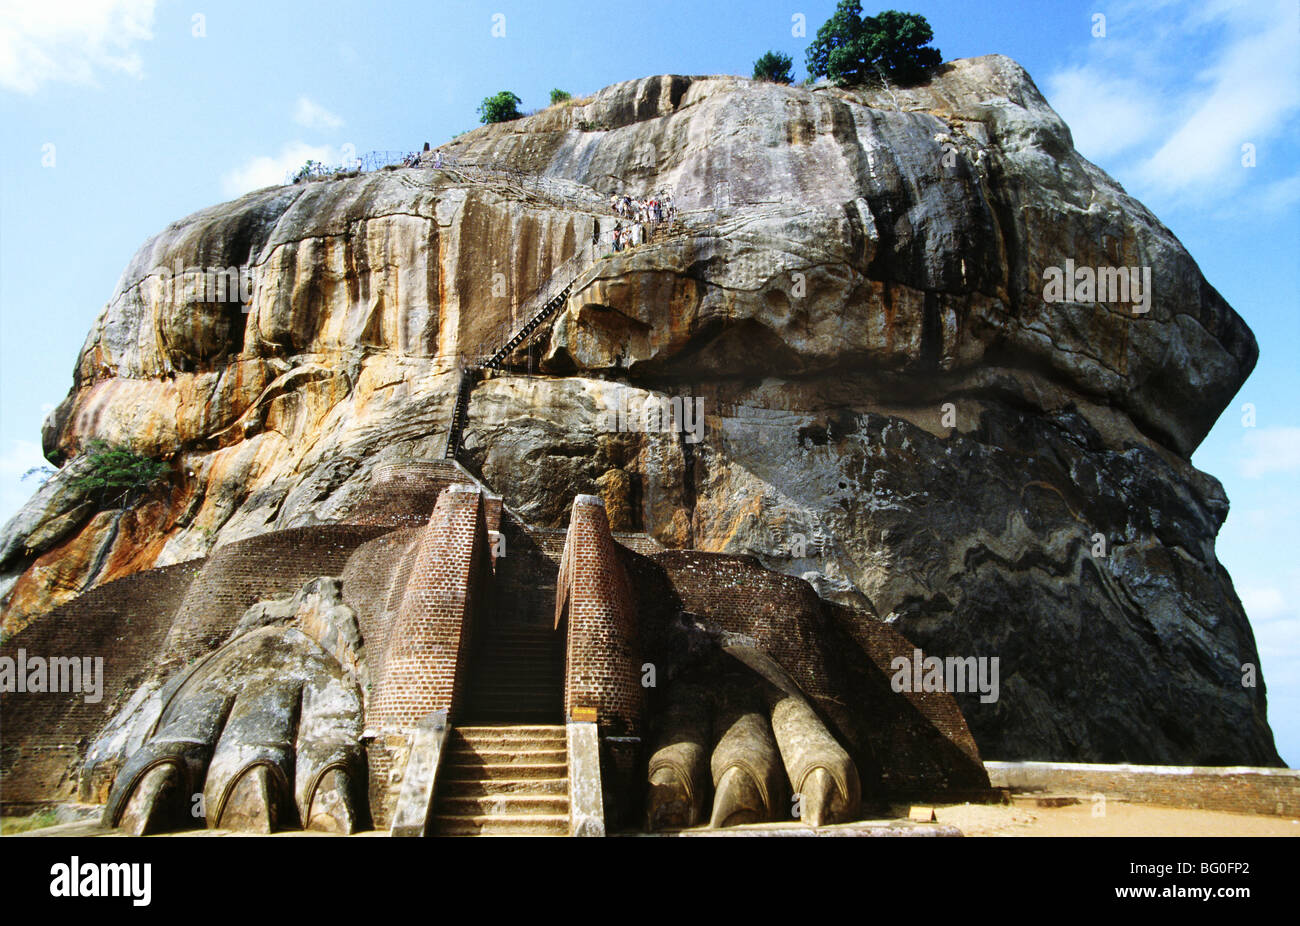 Sigiriya, the 5th century rock citadel, containing ruins of palace complex built by King Kasyapa in the 5th century, Sri Lanka Stock Photo